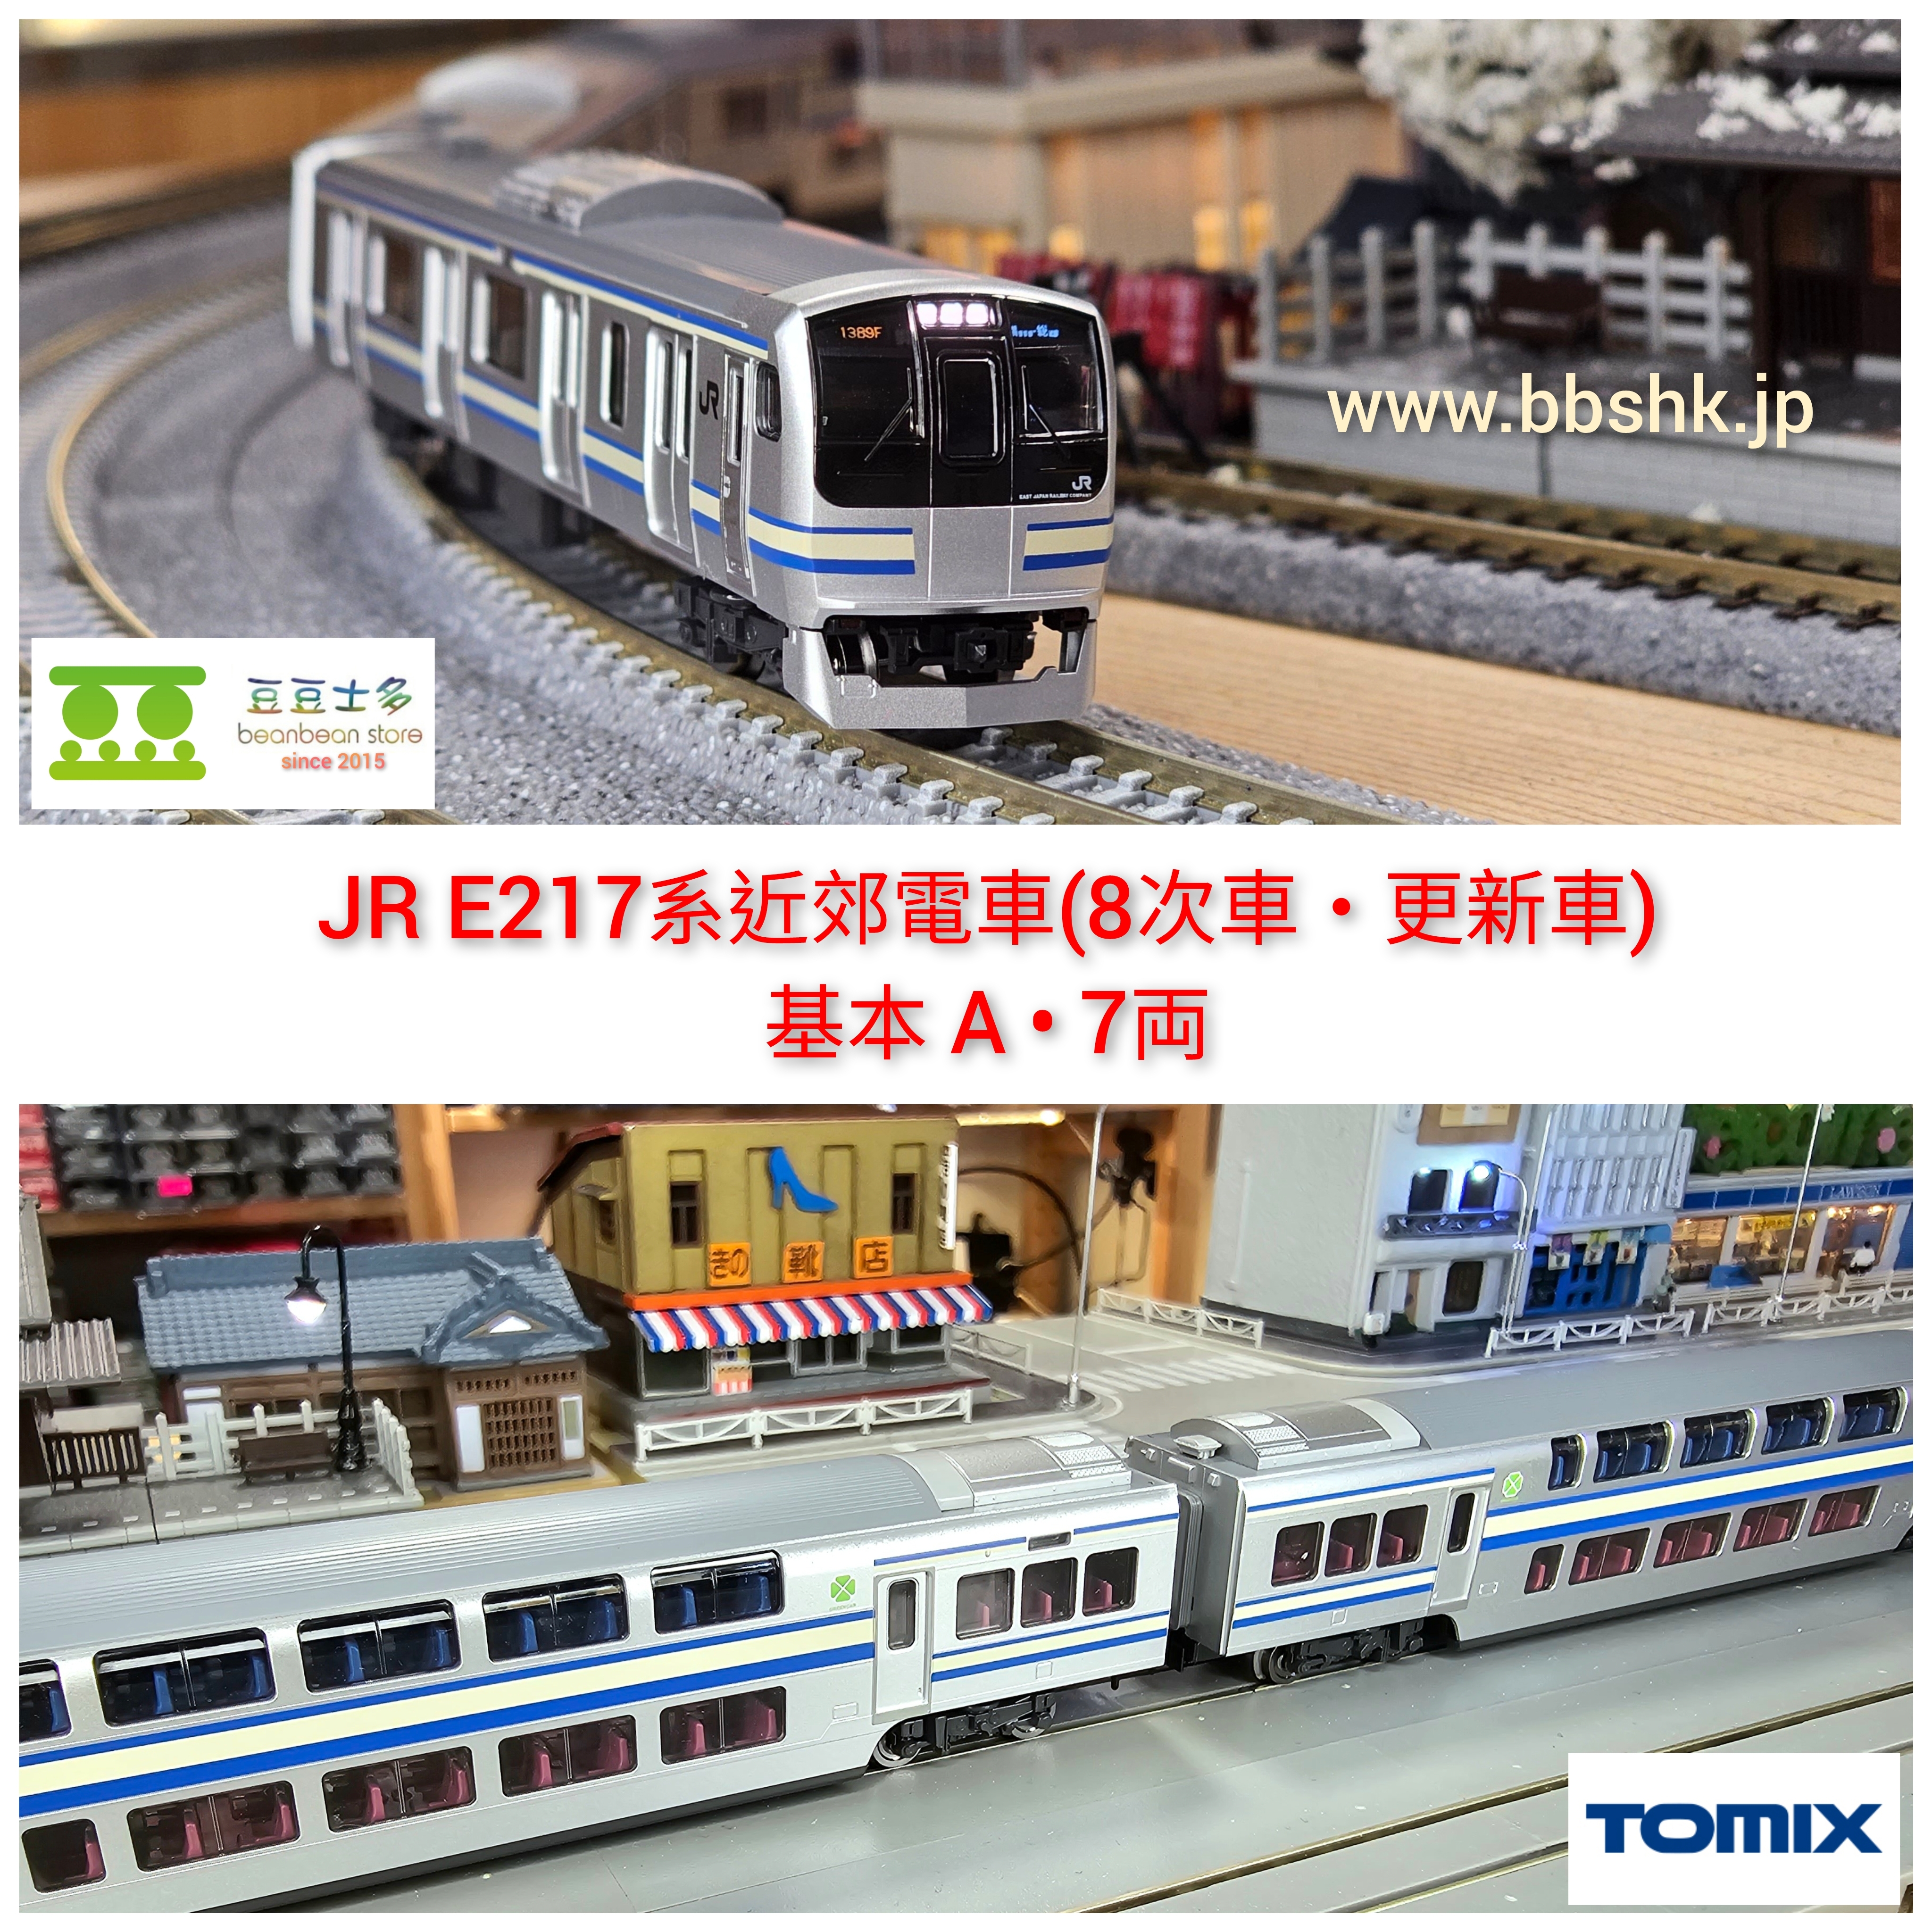 TOMIX 98828 JR E217系近郊電車(8次車・更新車) 基本A・7 両